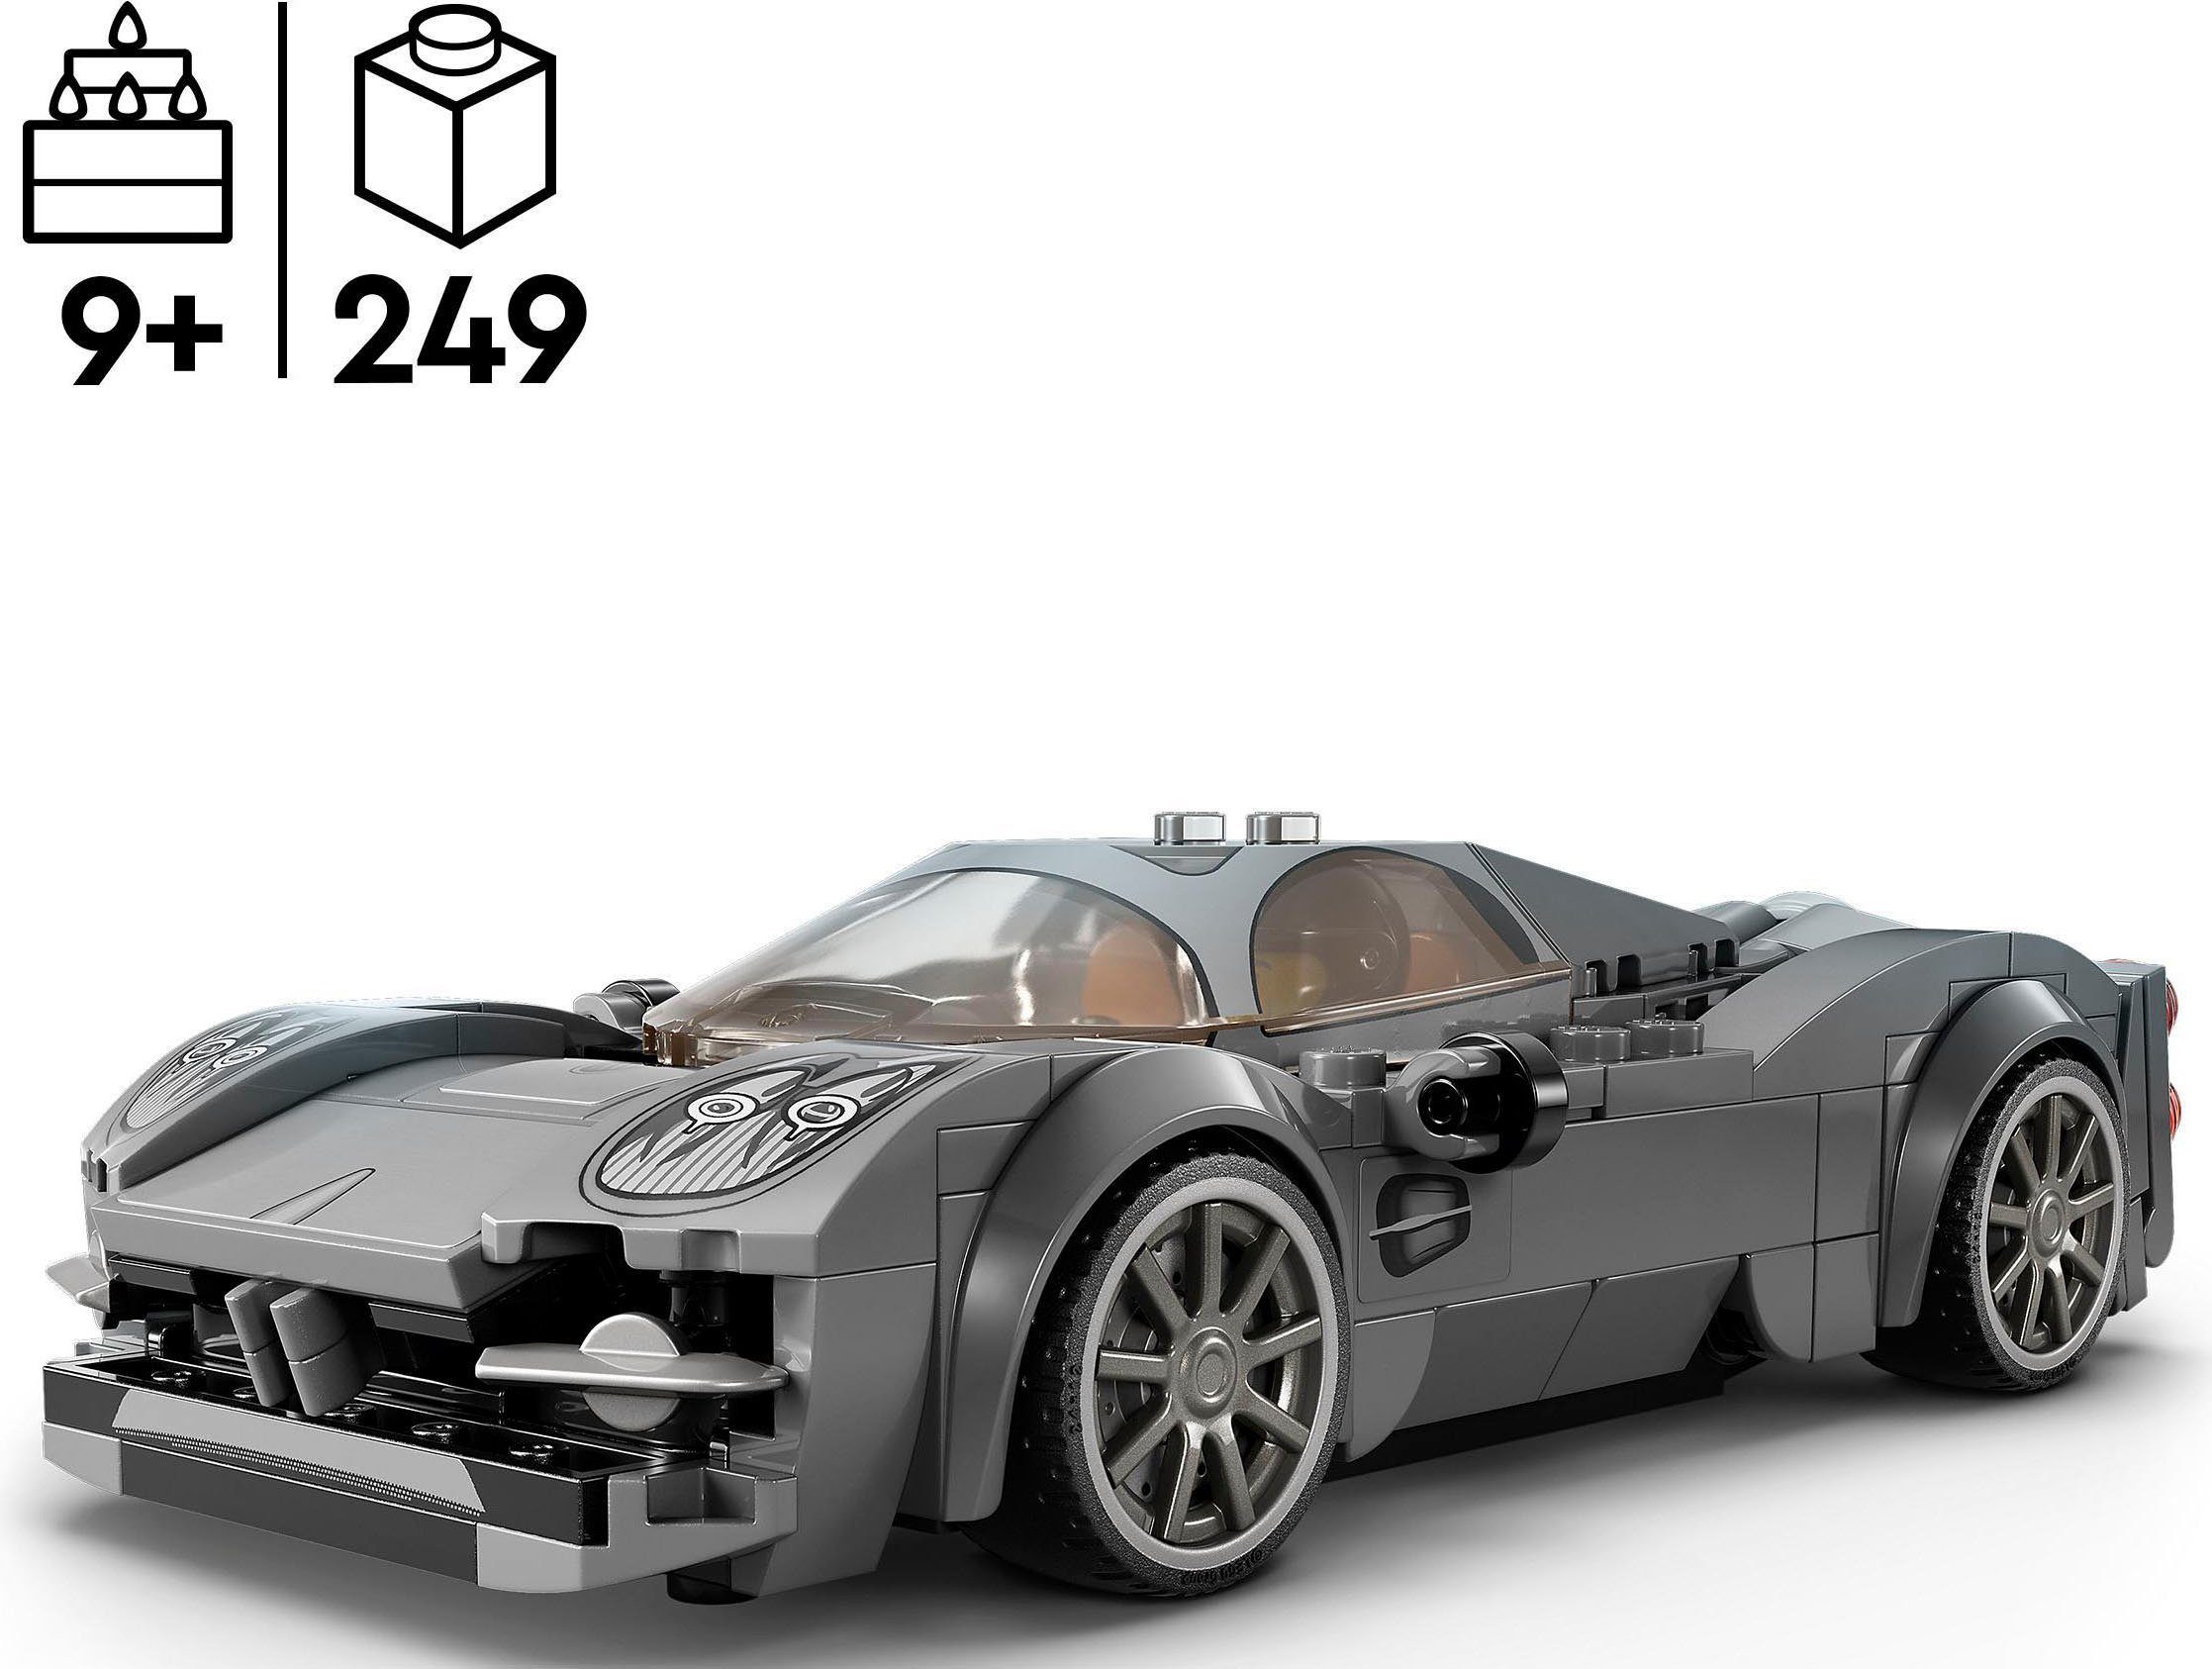 (76915), Speed (249 LEGO® Utopia Pagani Champions, St) Konstruktionsspielsteine LEGO®